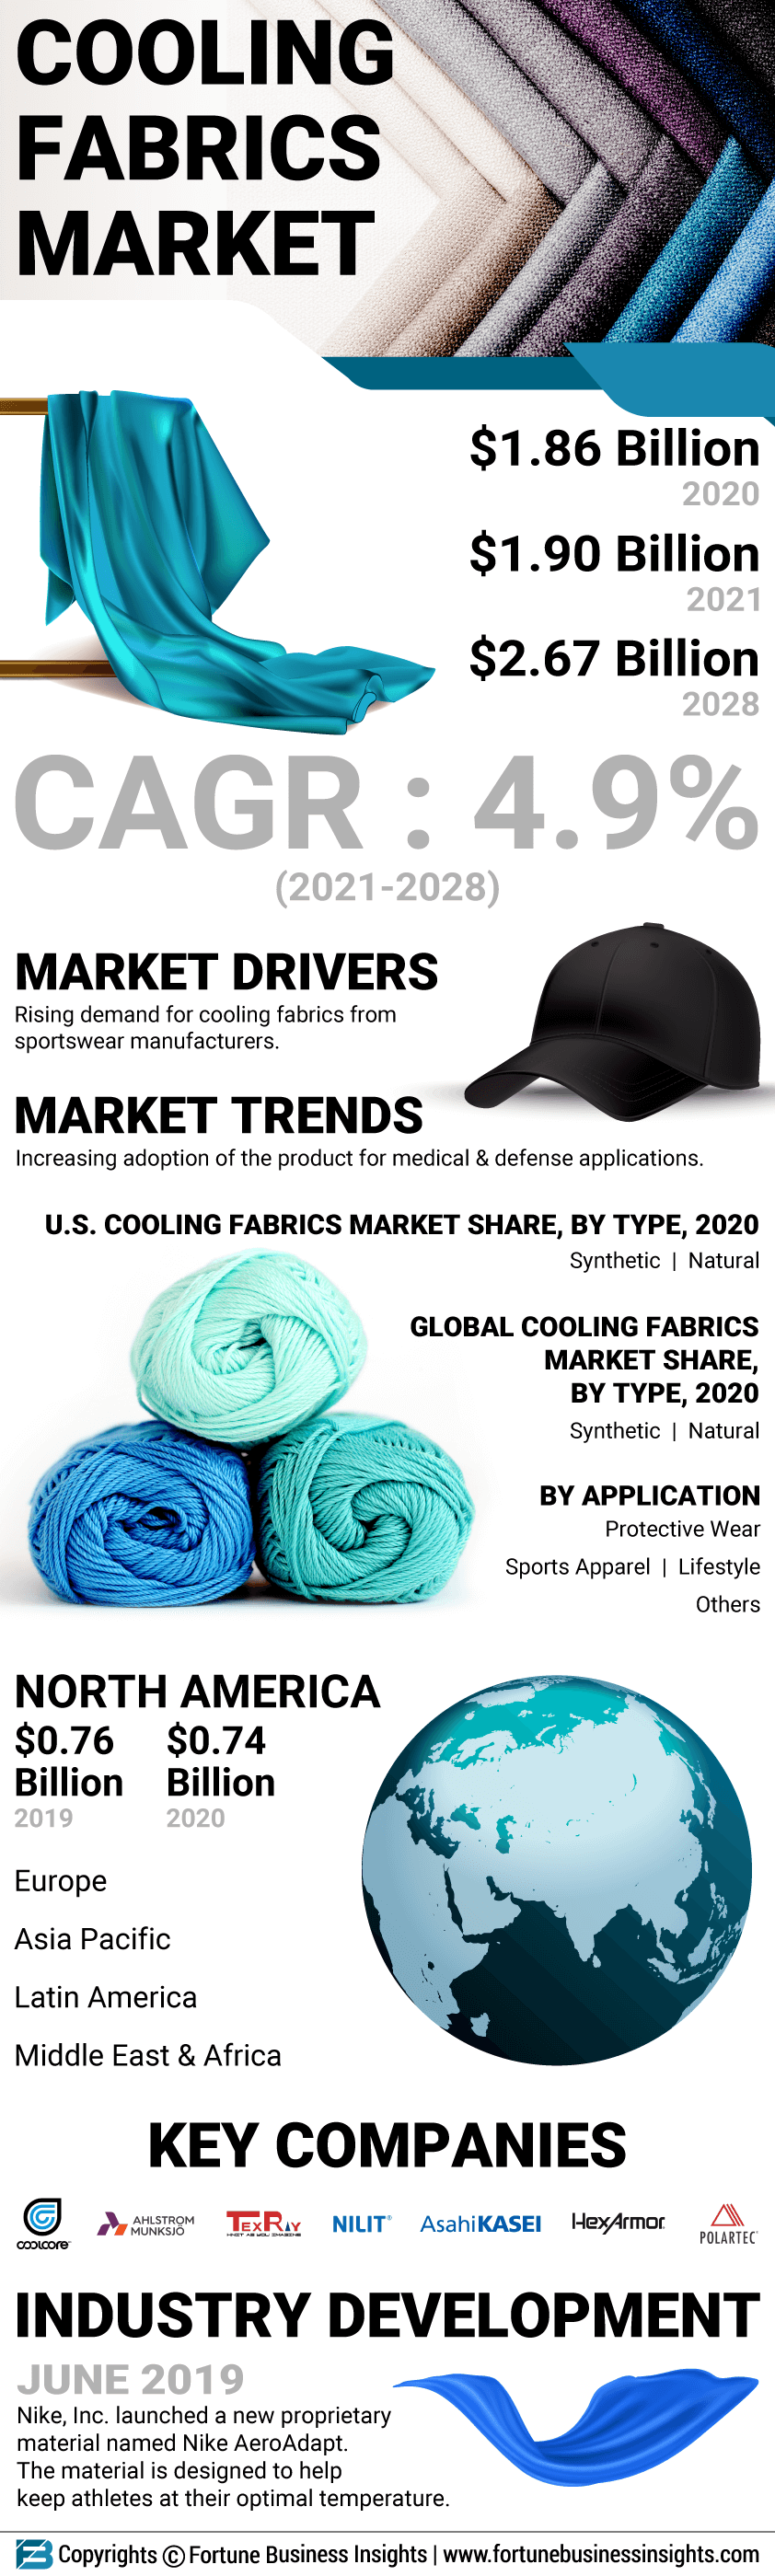 Cooling Fabrics Market 